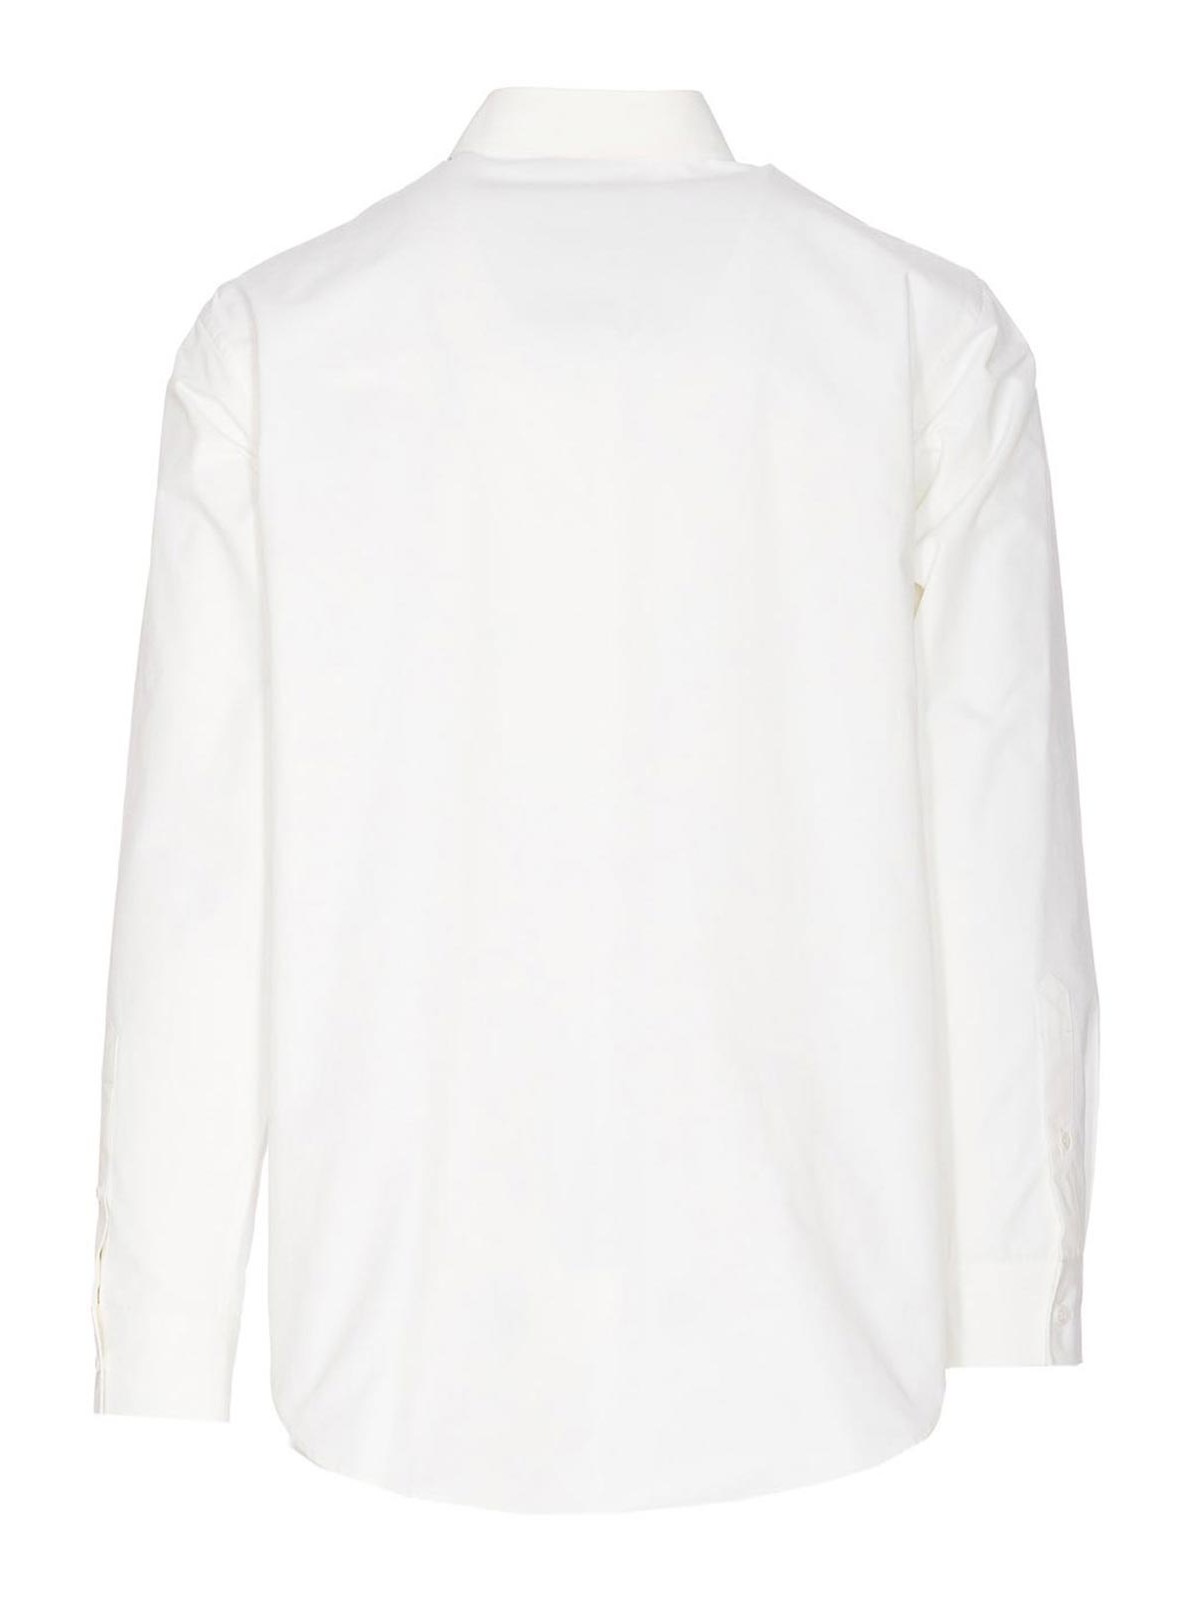 Shop Moschino White Heart Classic Shirt